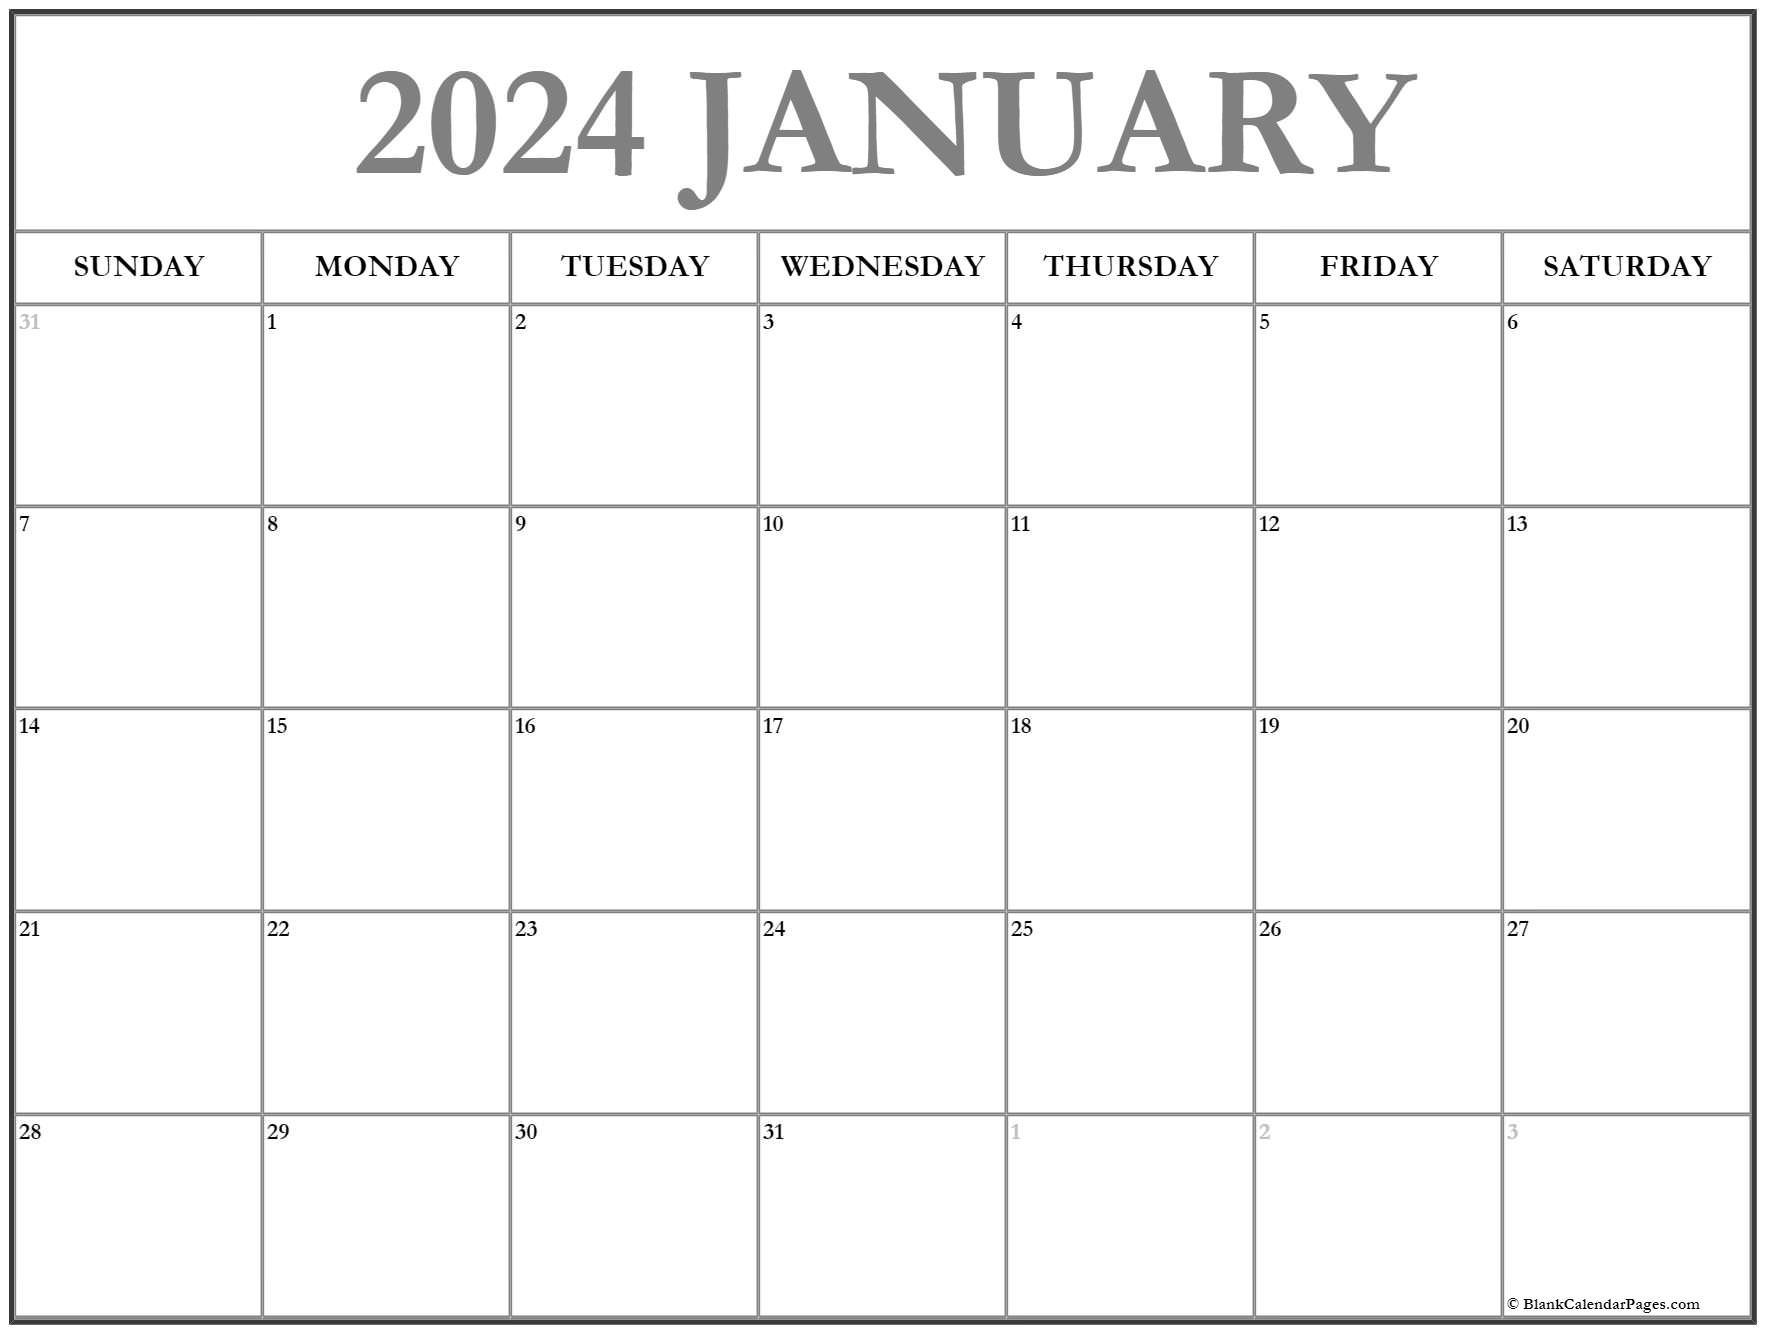 january-2024-calendar-free-printable-calendar